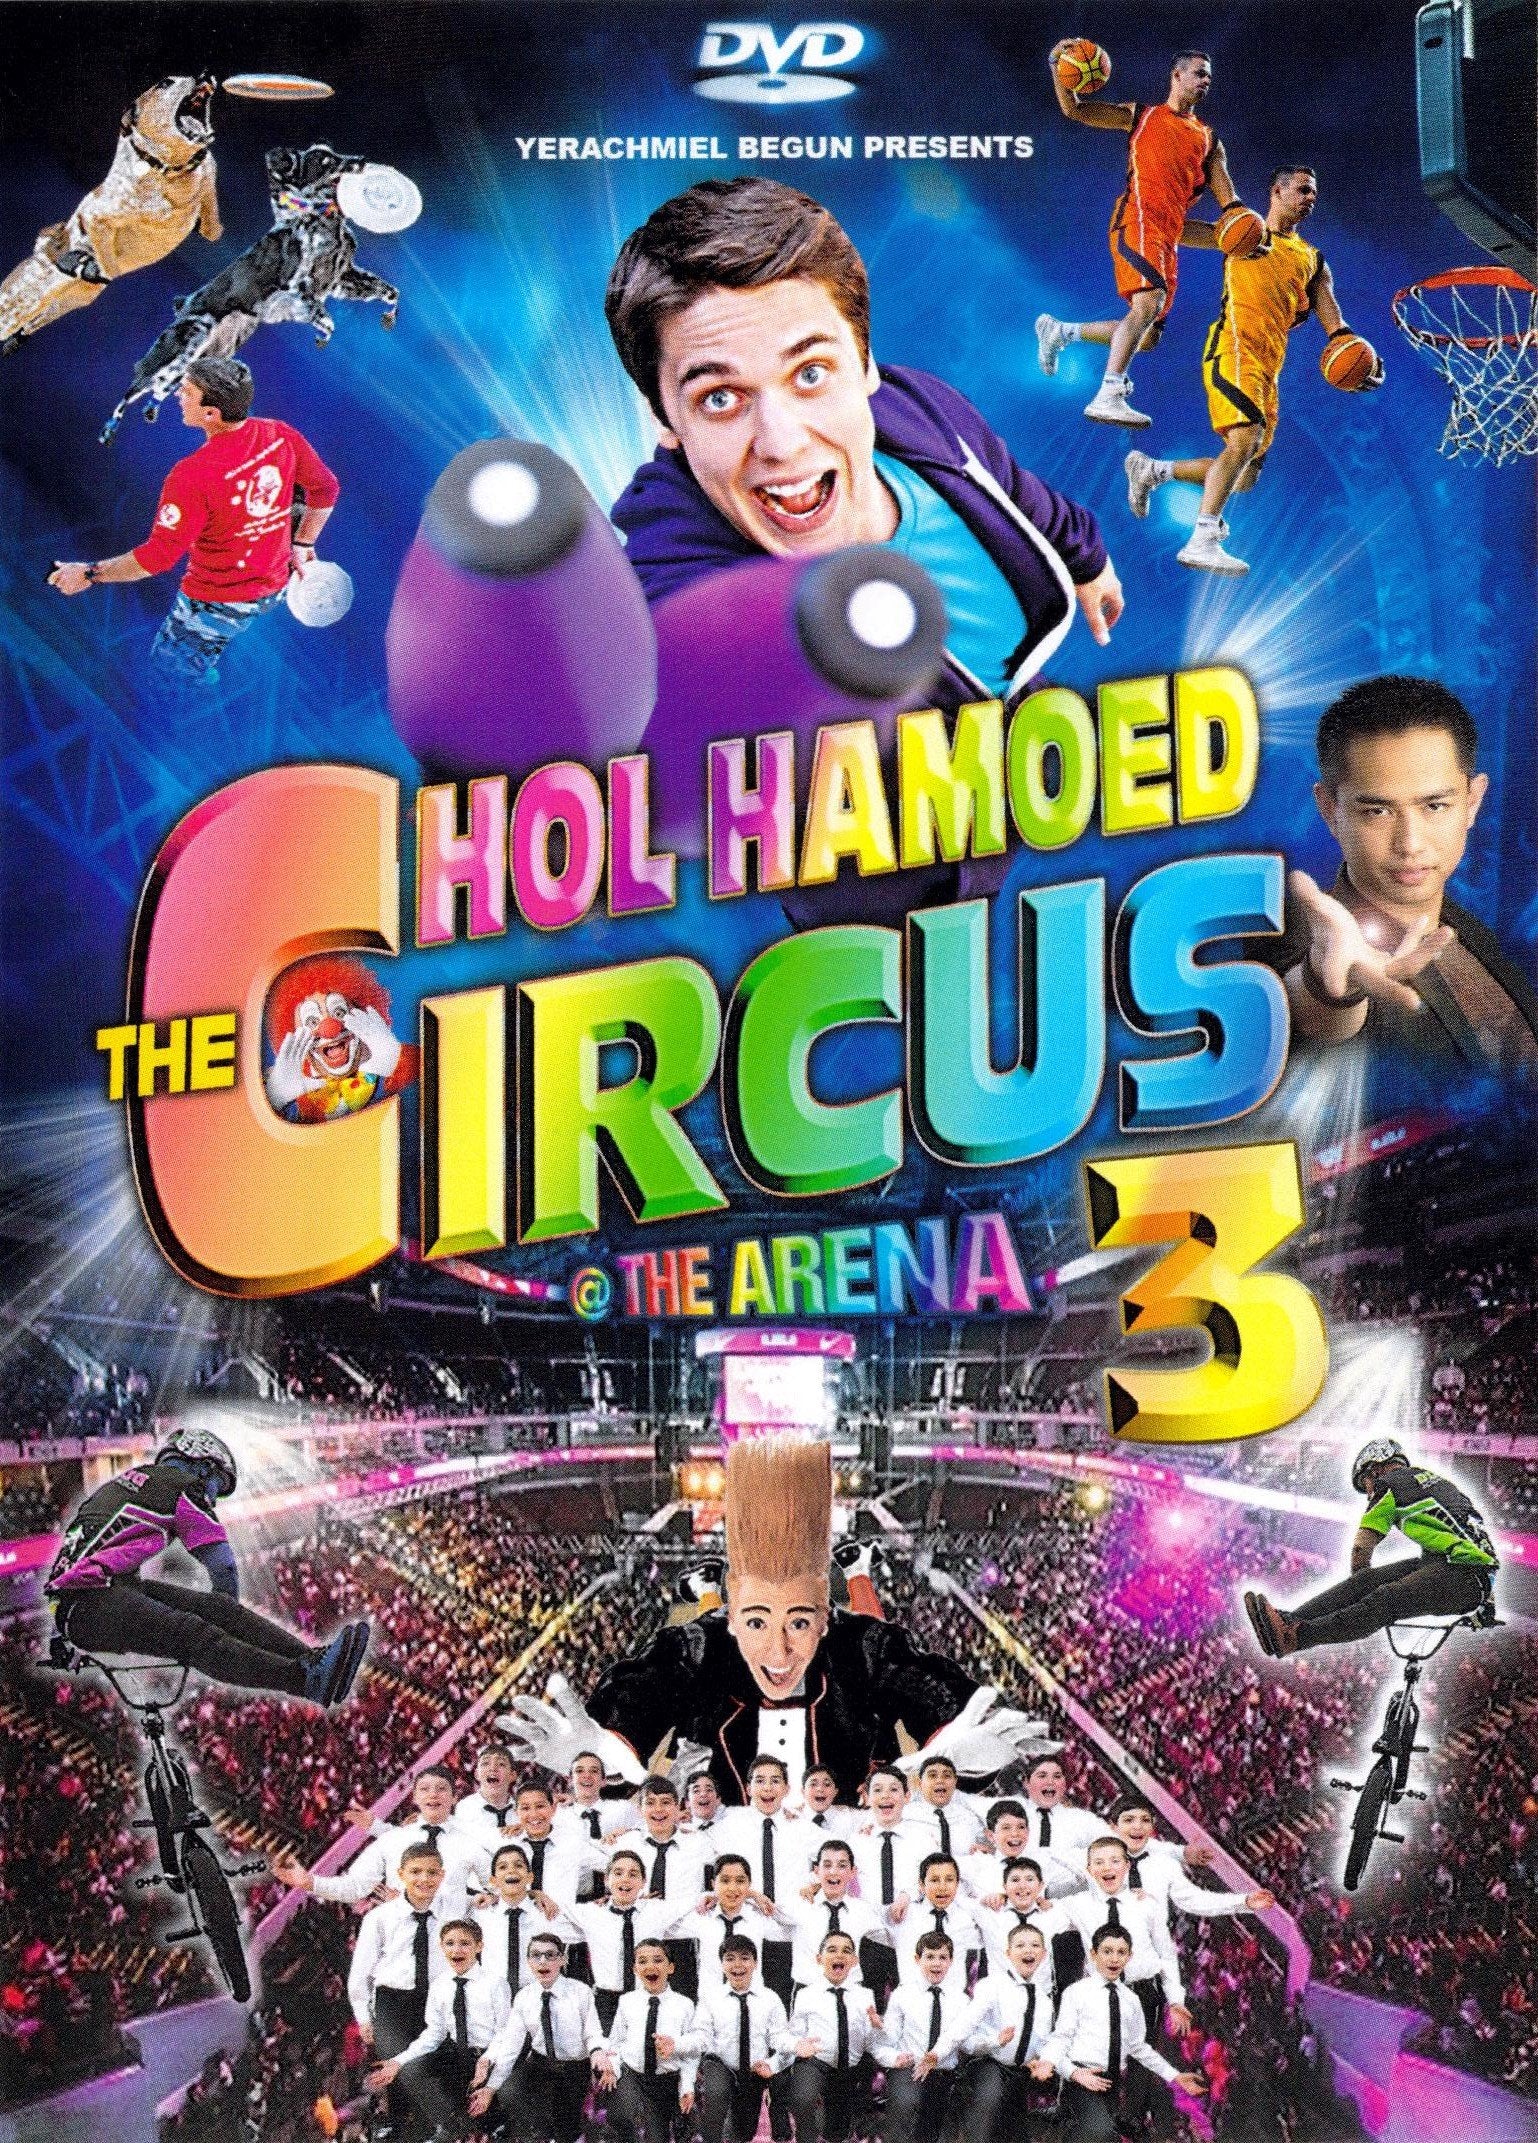 Chol Hamoed Circus 3